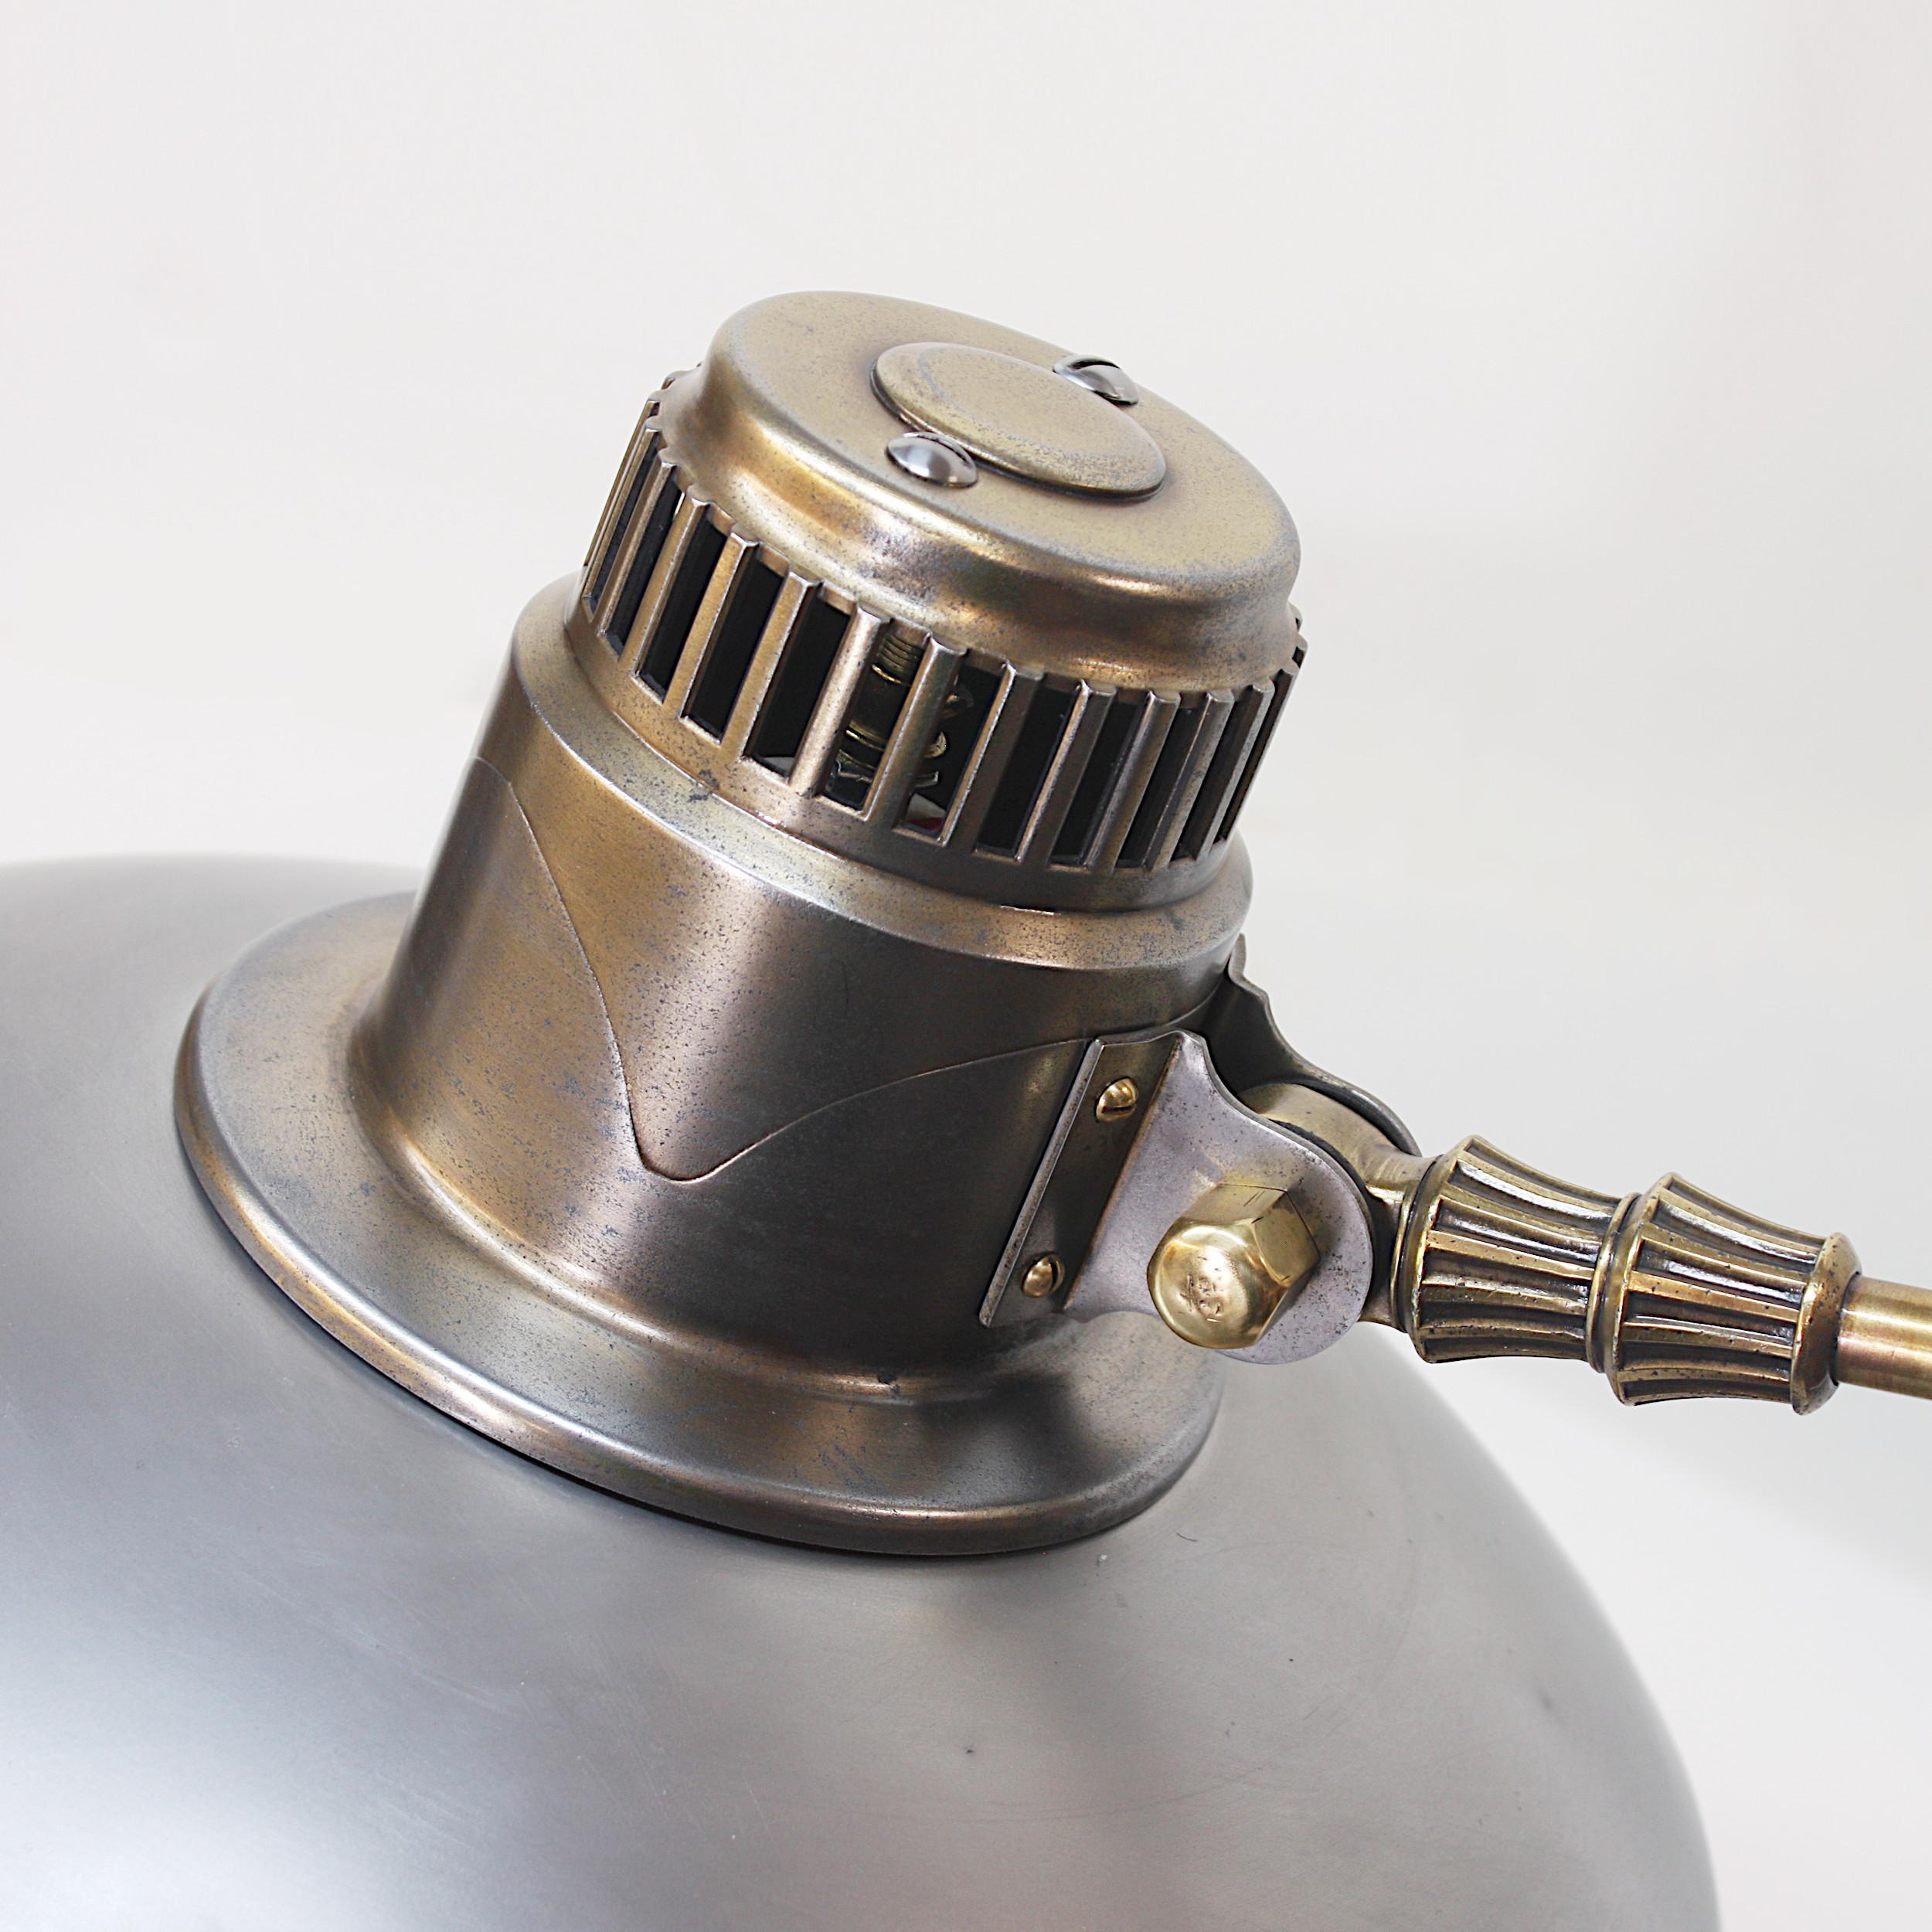 American Vintage 1940s Mid-Century Modern Industrial Aluminum GE Sunlamp Floor Lamp